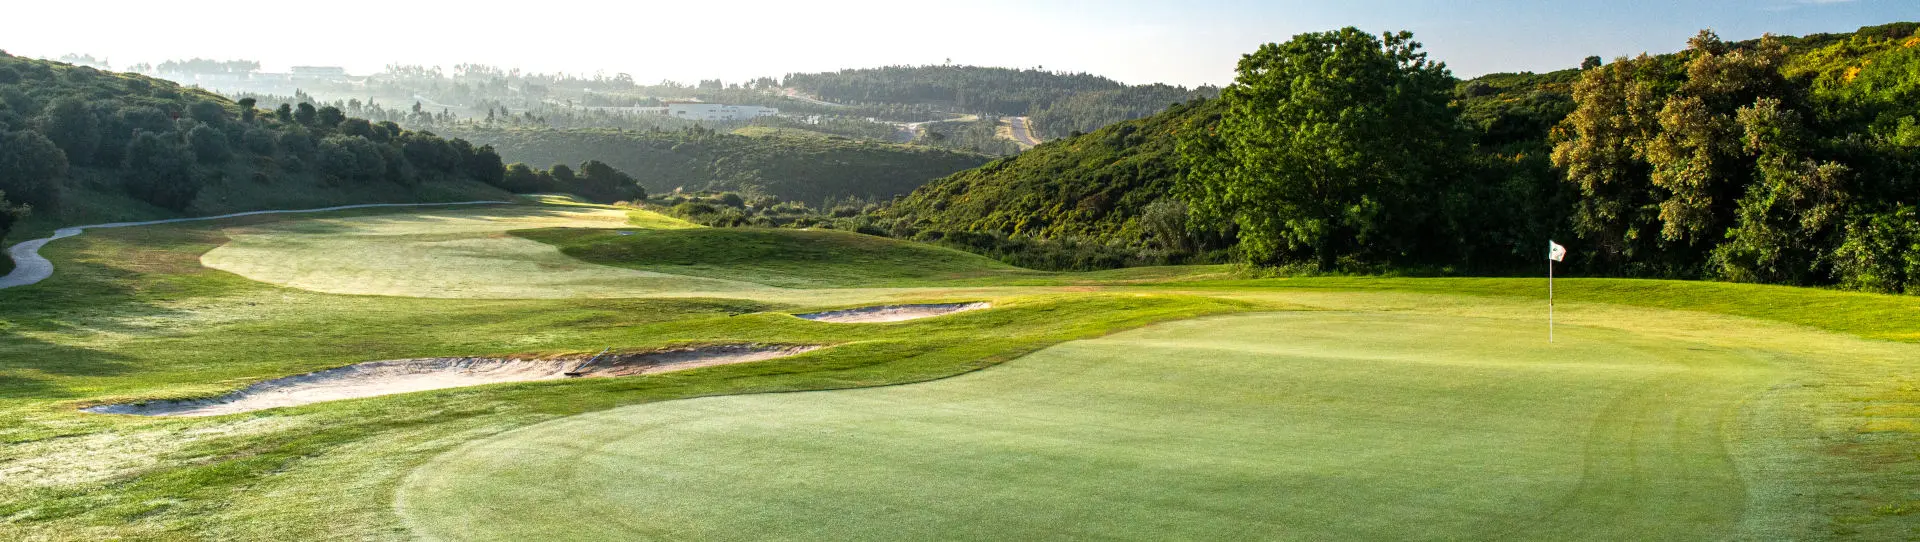 Portugal Golf Driving Range - Belas Clube de Campo - Drivin Range - Photo 1